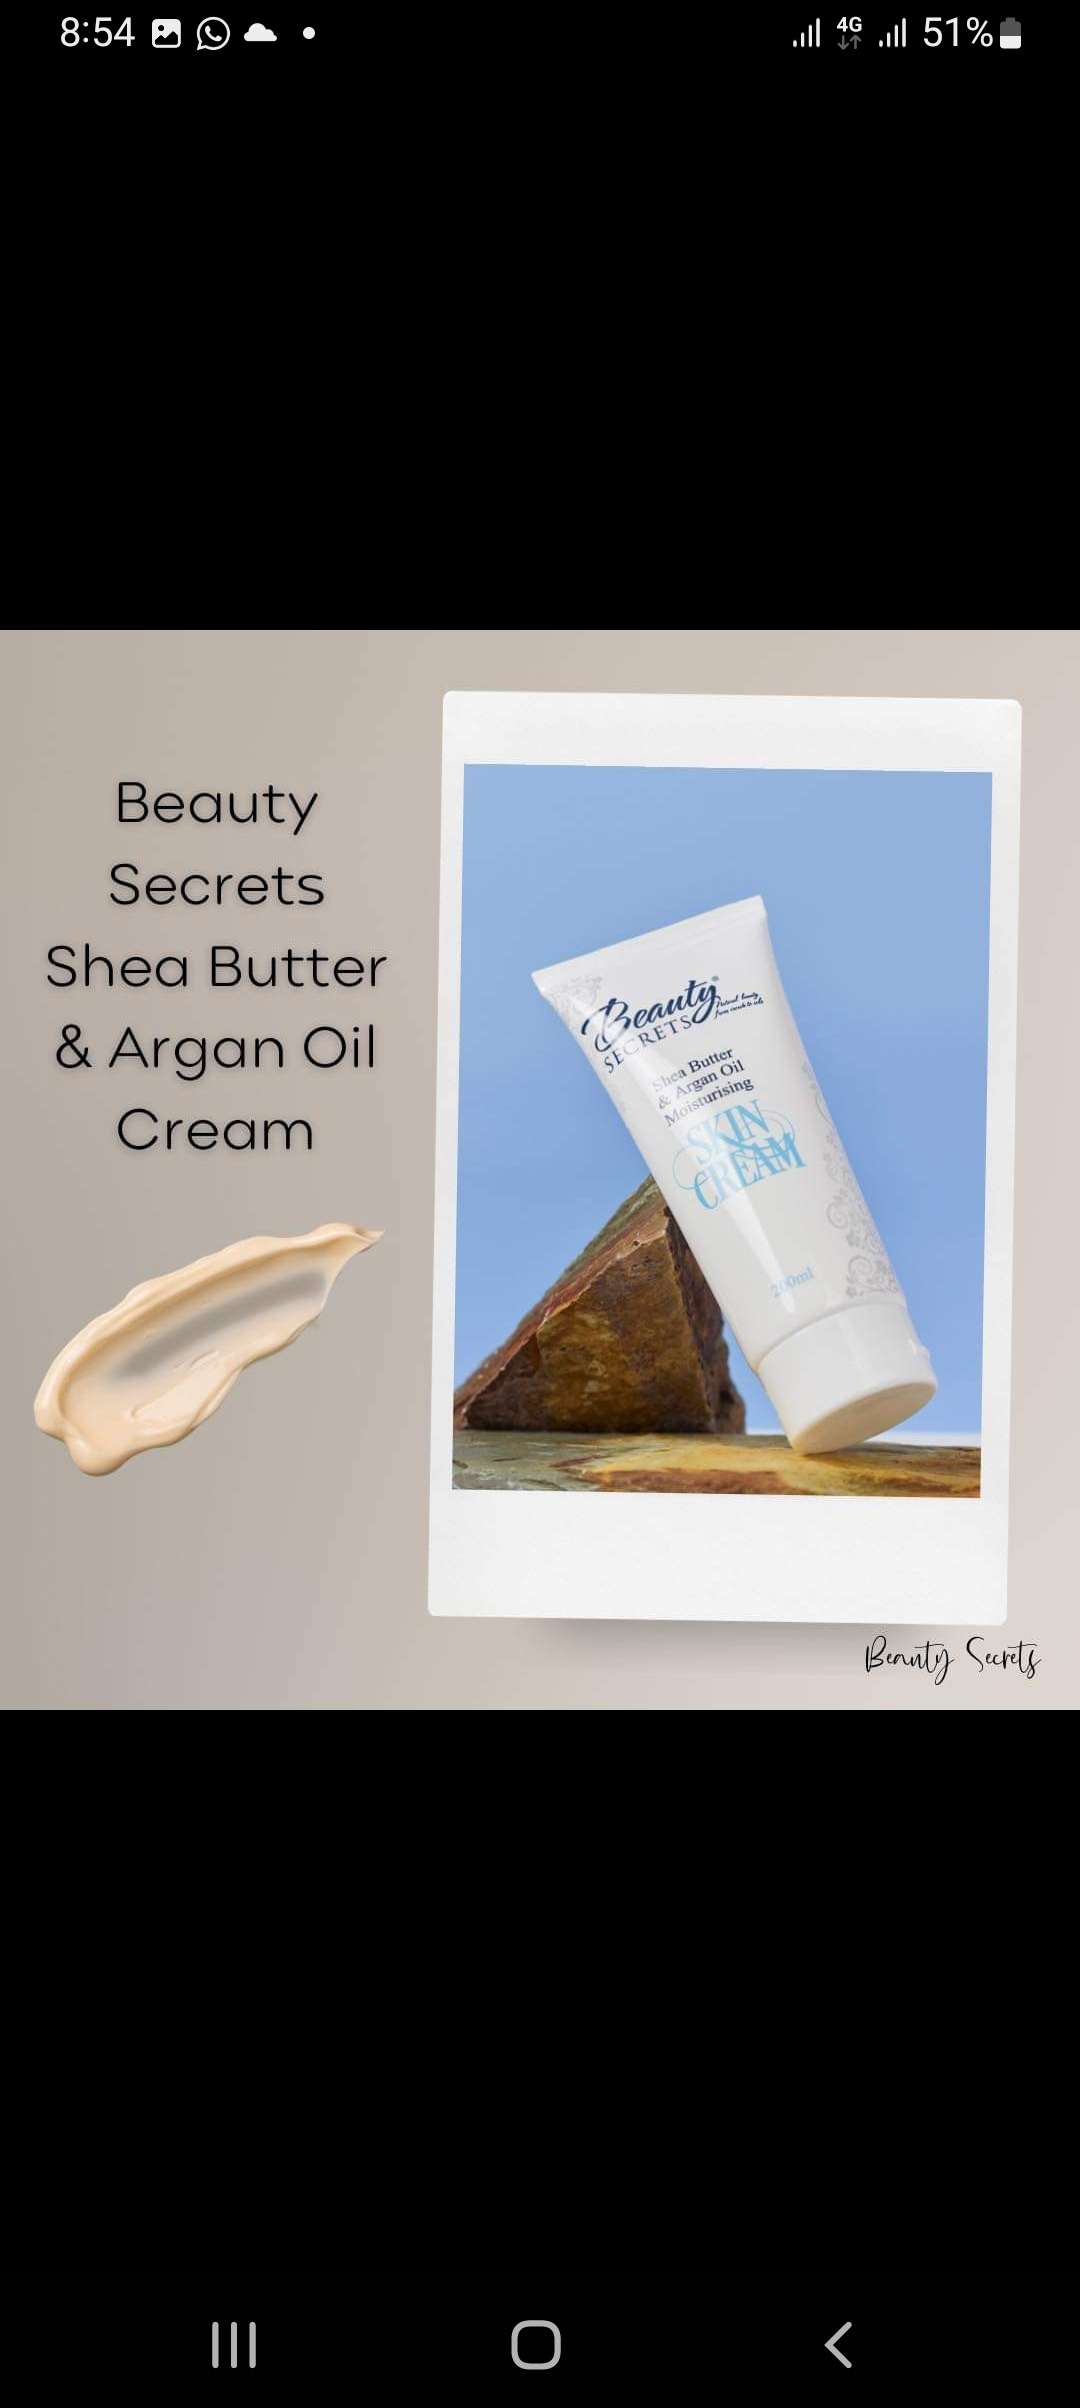 Beauty Secrets Range of Products